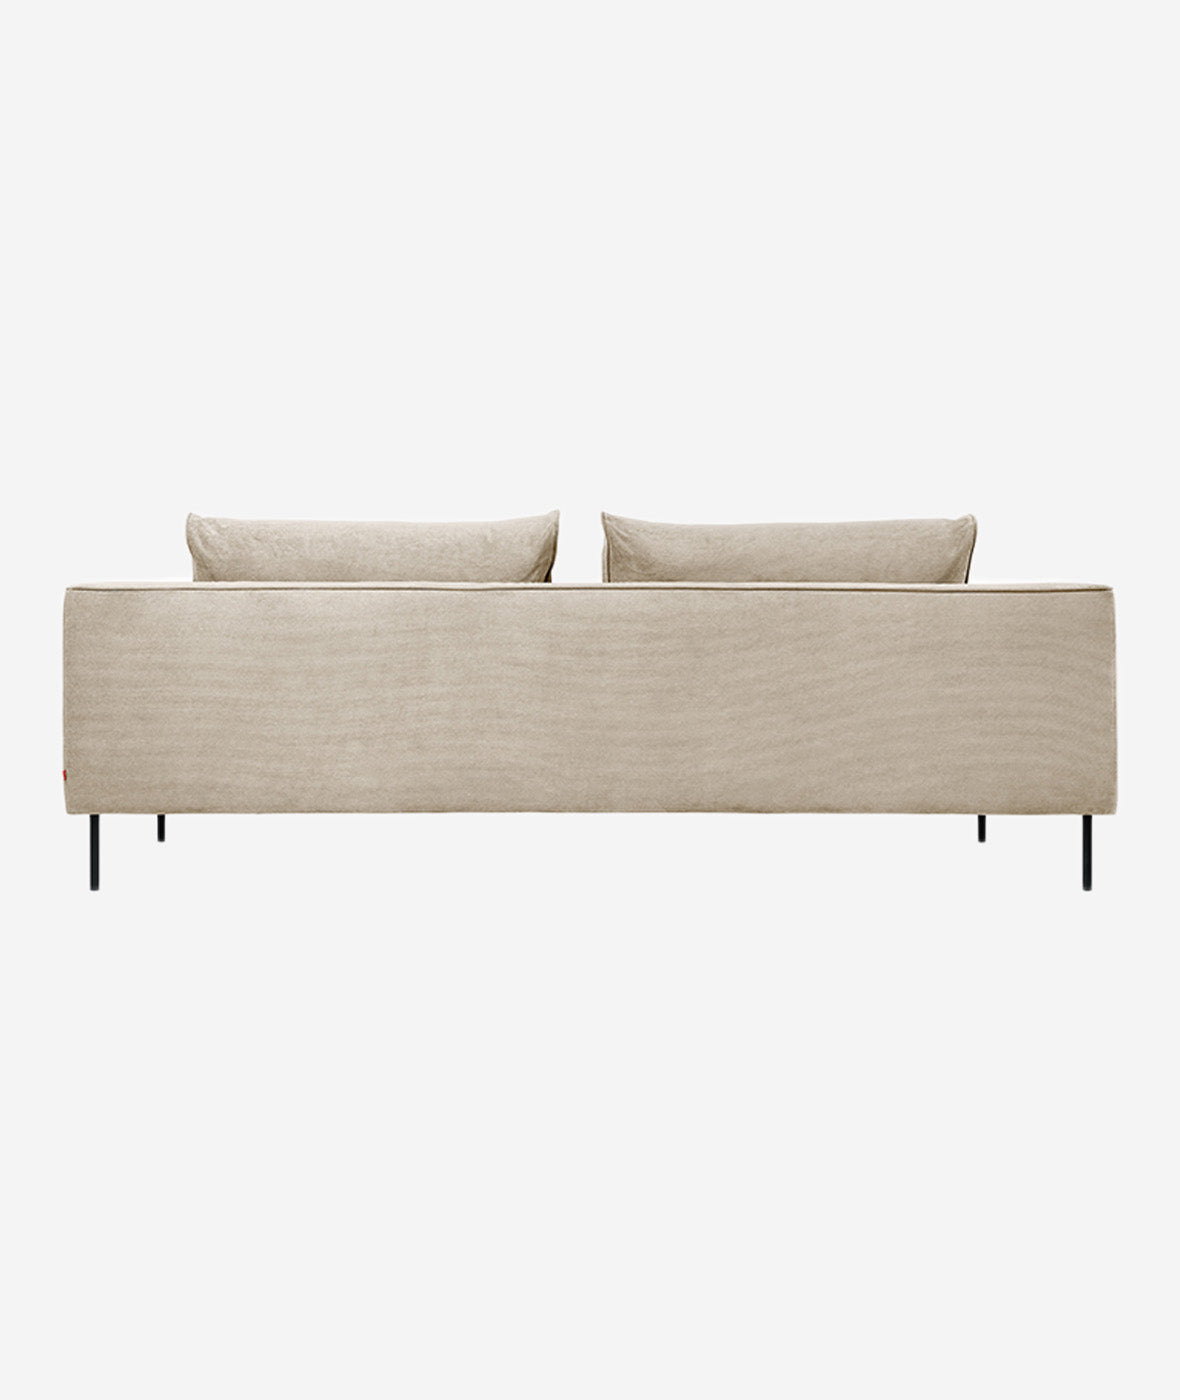 Renfrew Sofa - More Options